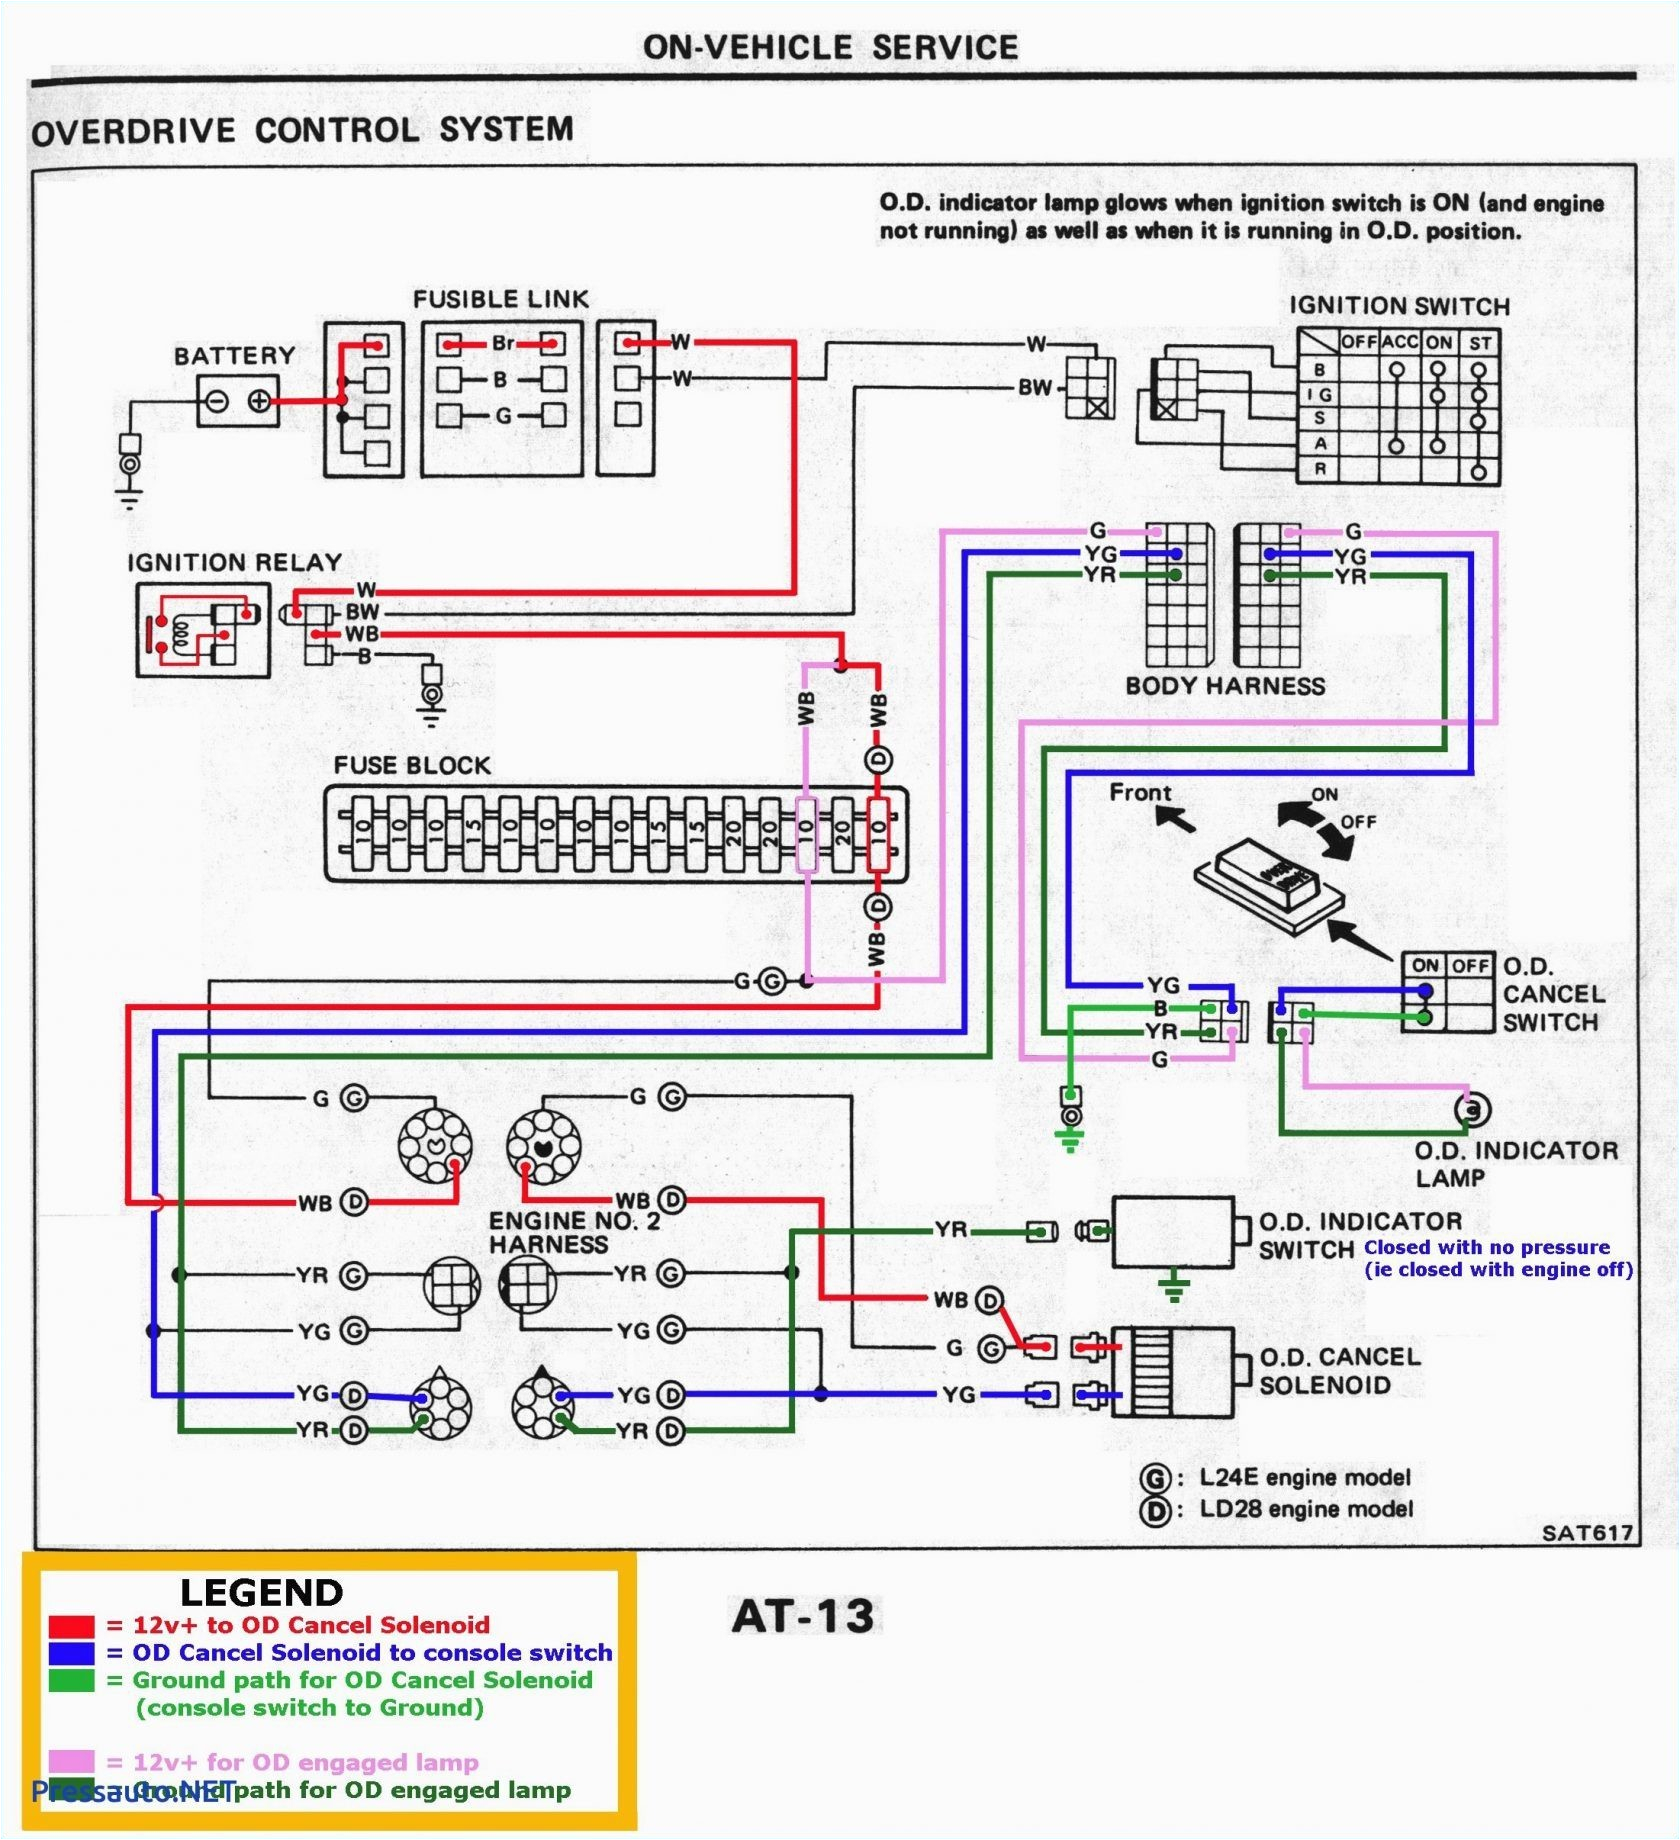 1998 Honda Civic Wiring Diagram 96 Honda Civic Wiring Diagram Wiring Diagram toolbox